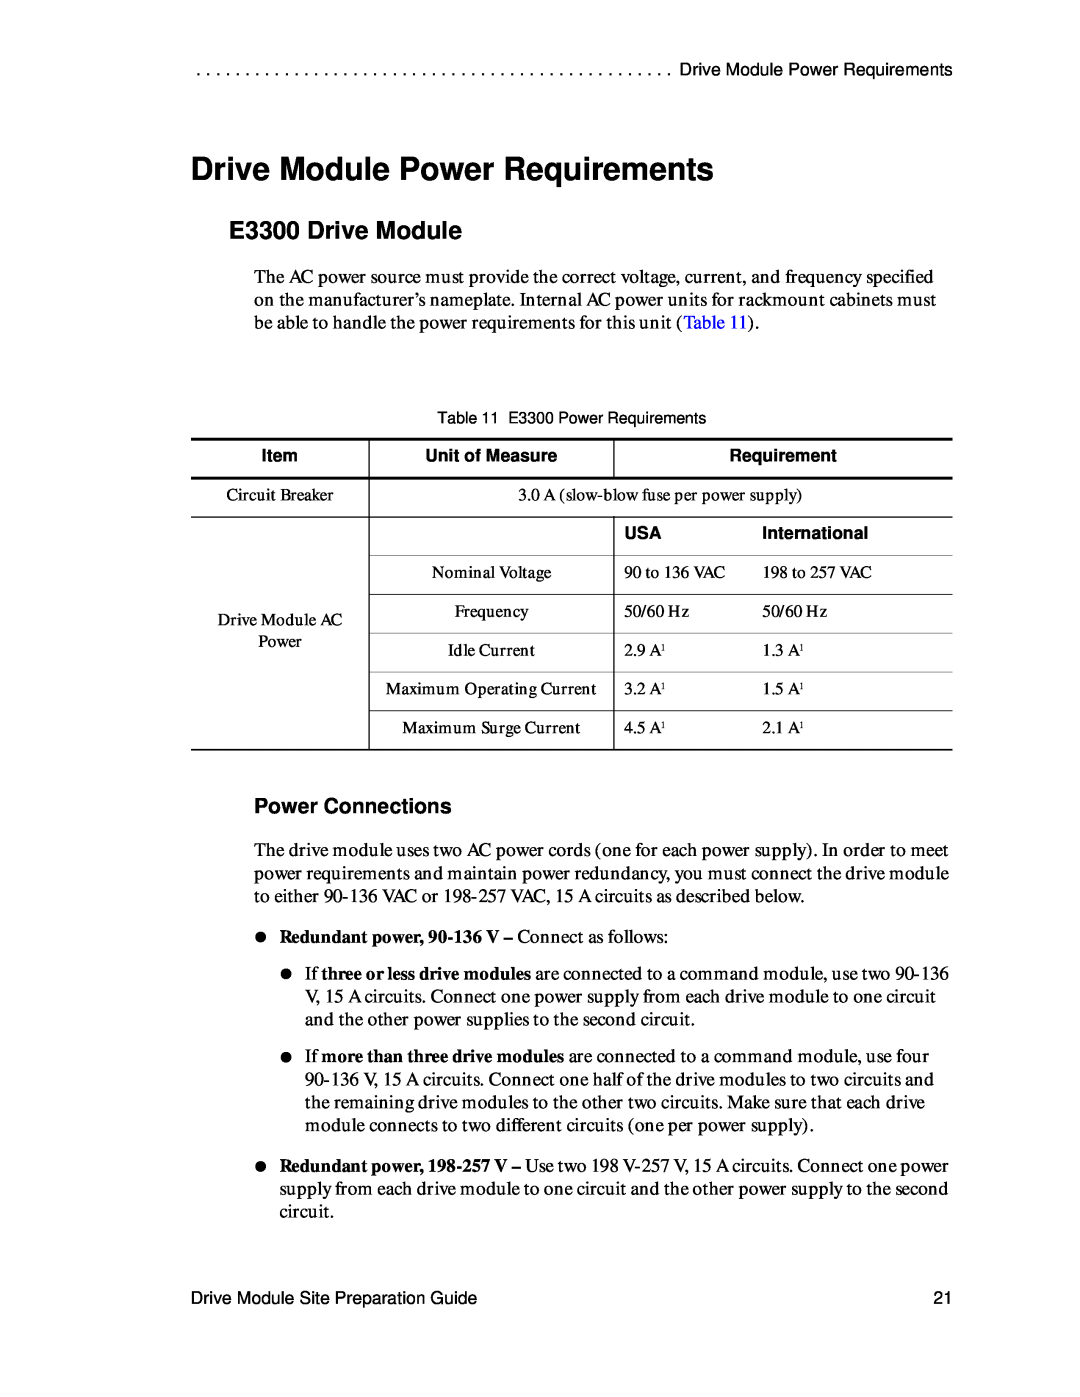 LSI DF1153-E1 manual Drive Module Power Requirements, E3300 Drive Module, Power Connections 